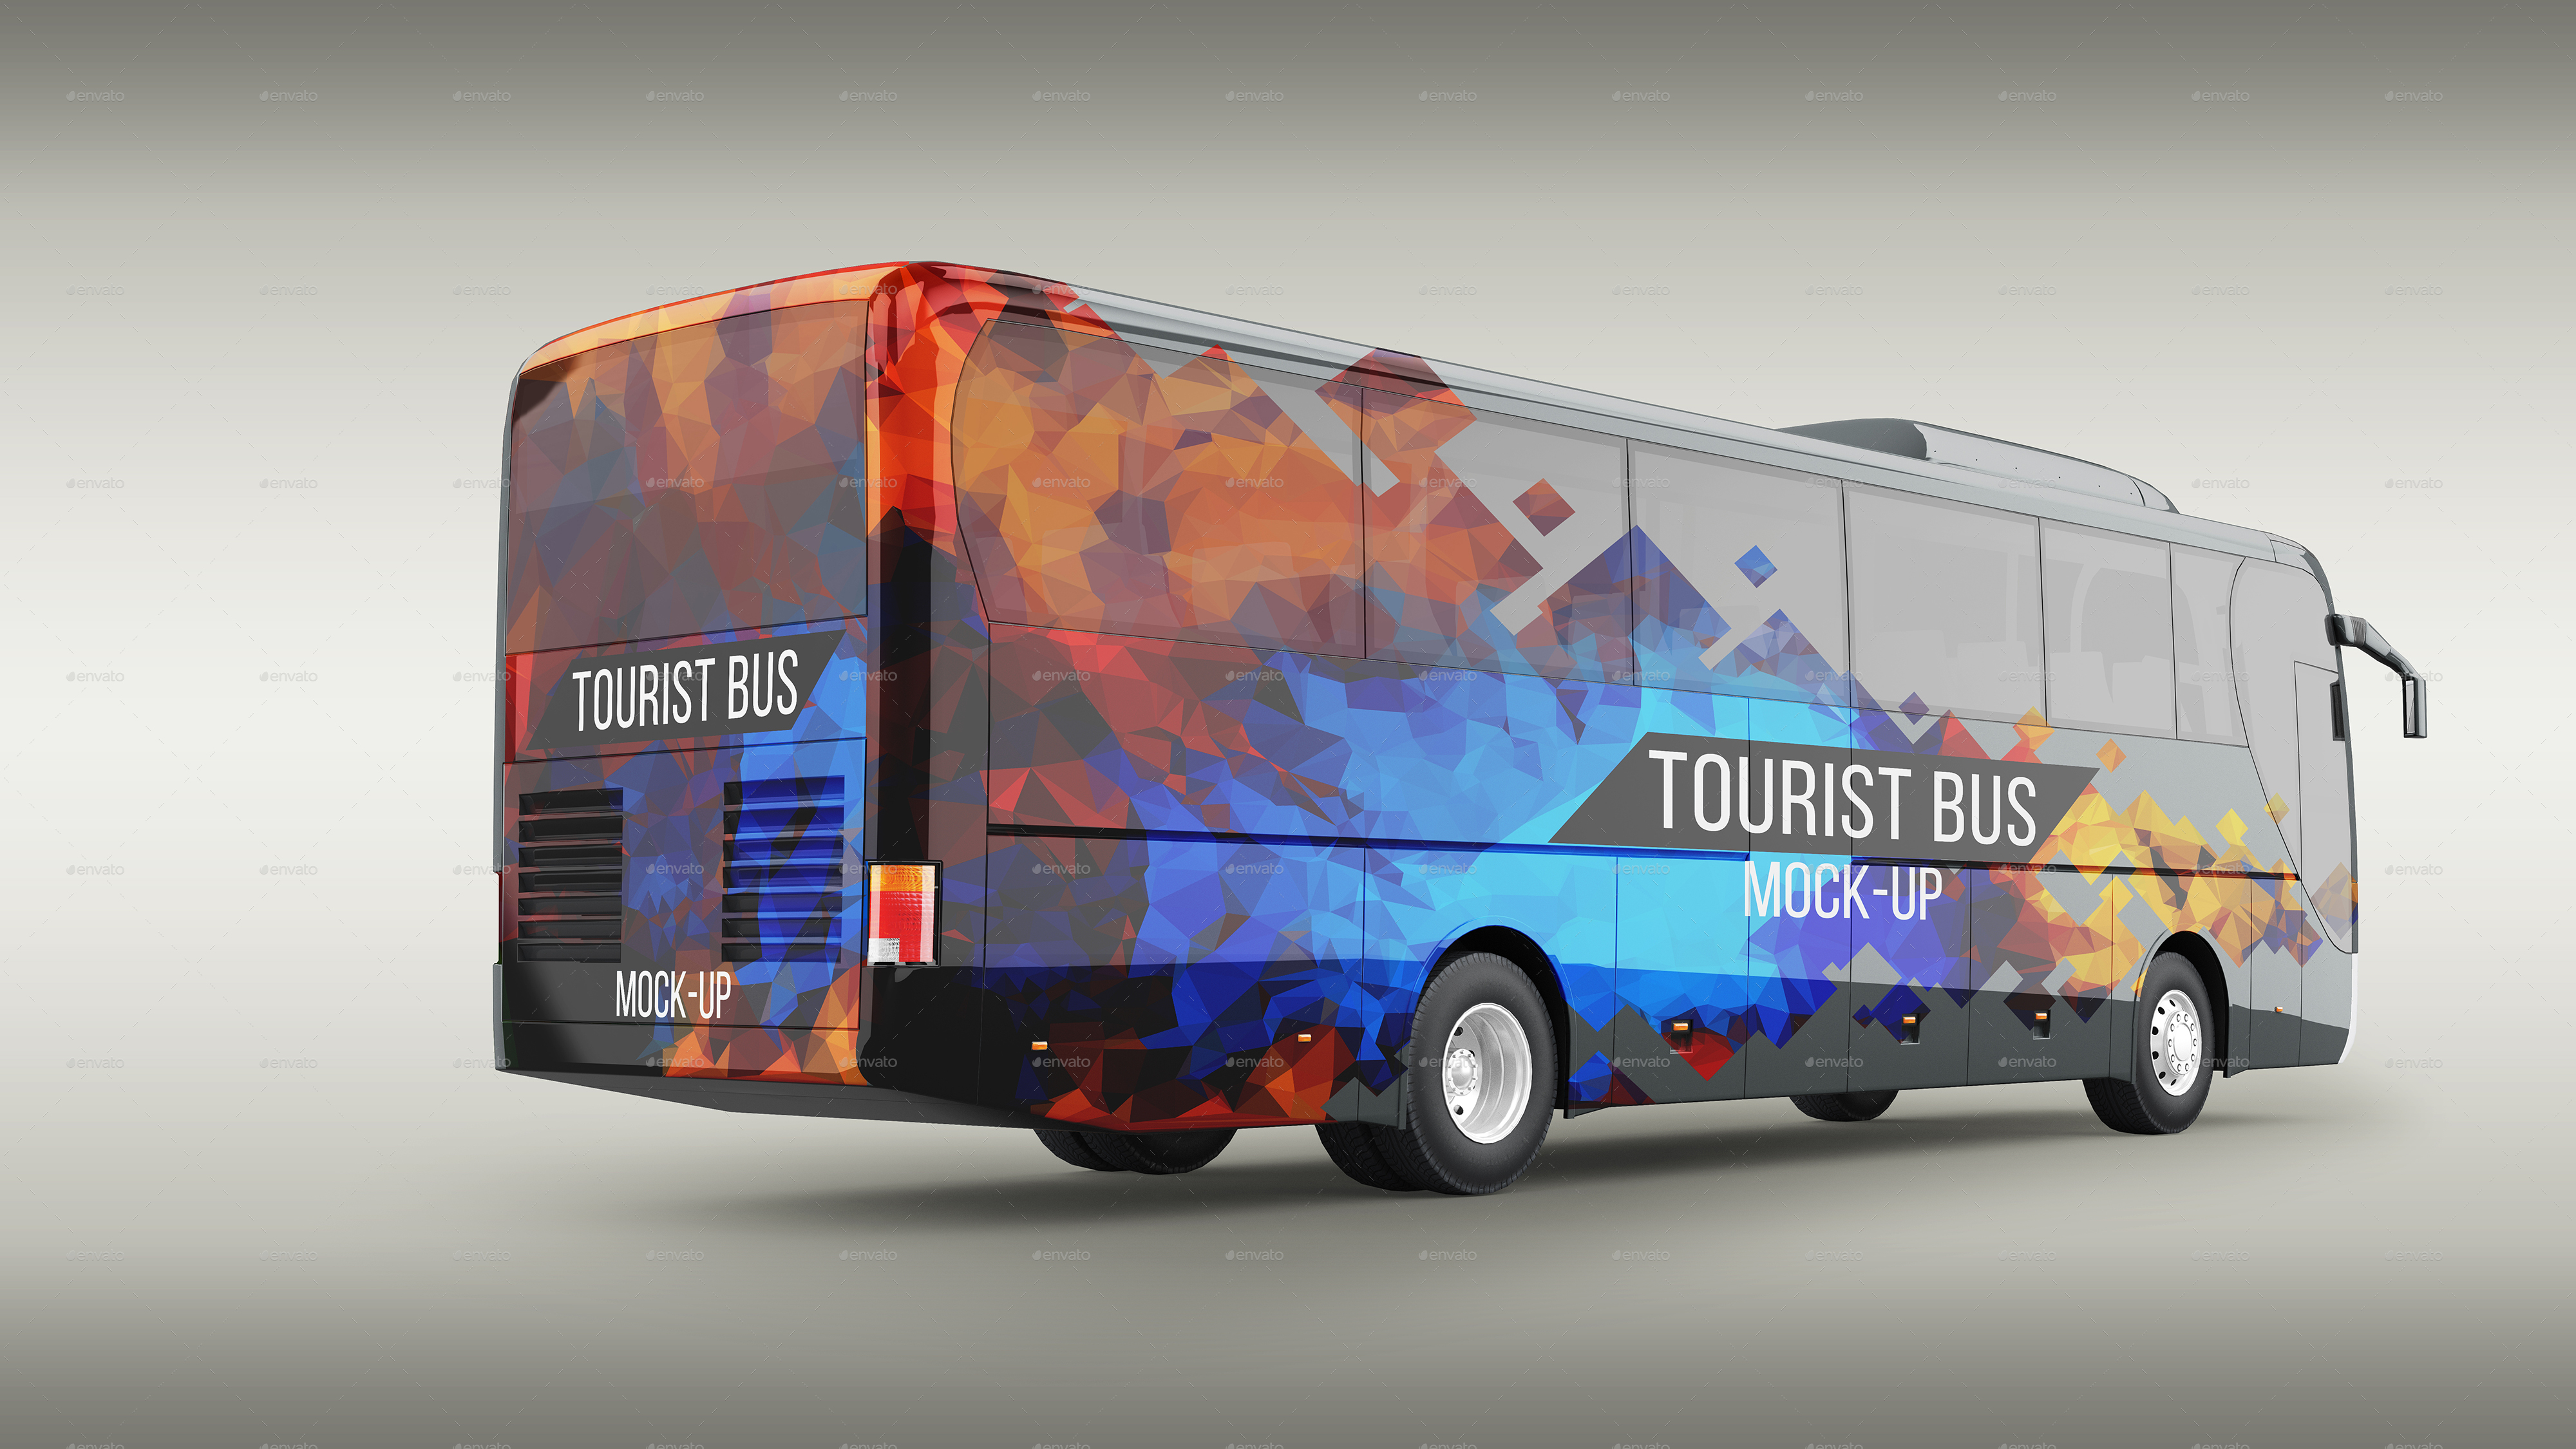 Download Tourist Bus Mock-Up by AlexKond | GraphicRiver